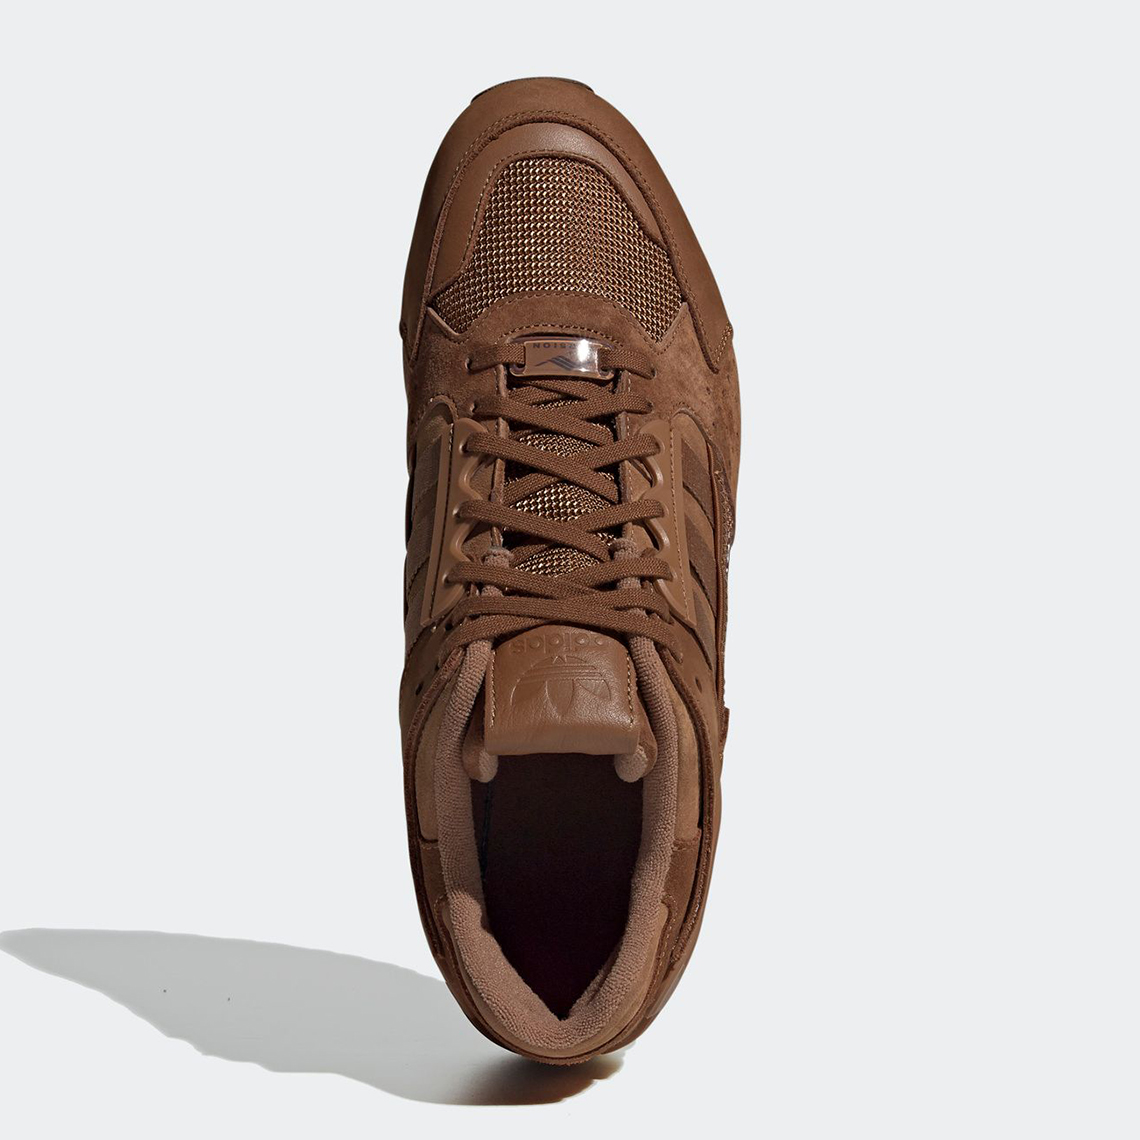 adidas-zx10000c-schokohase-chocolate-bunny-GX7576-3.jpg